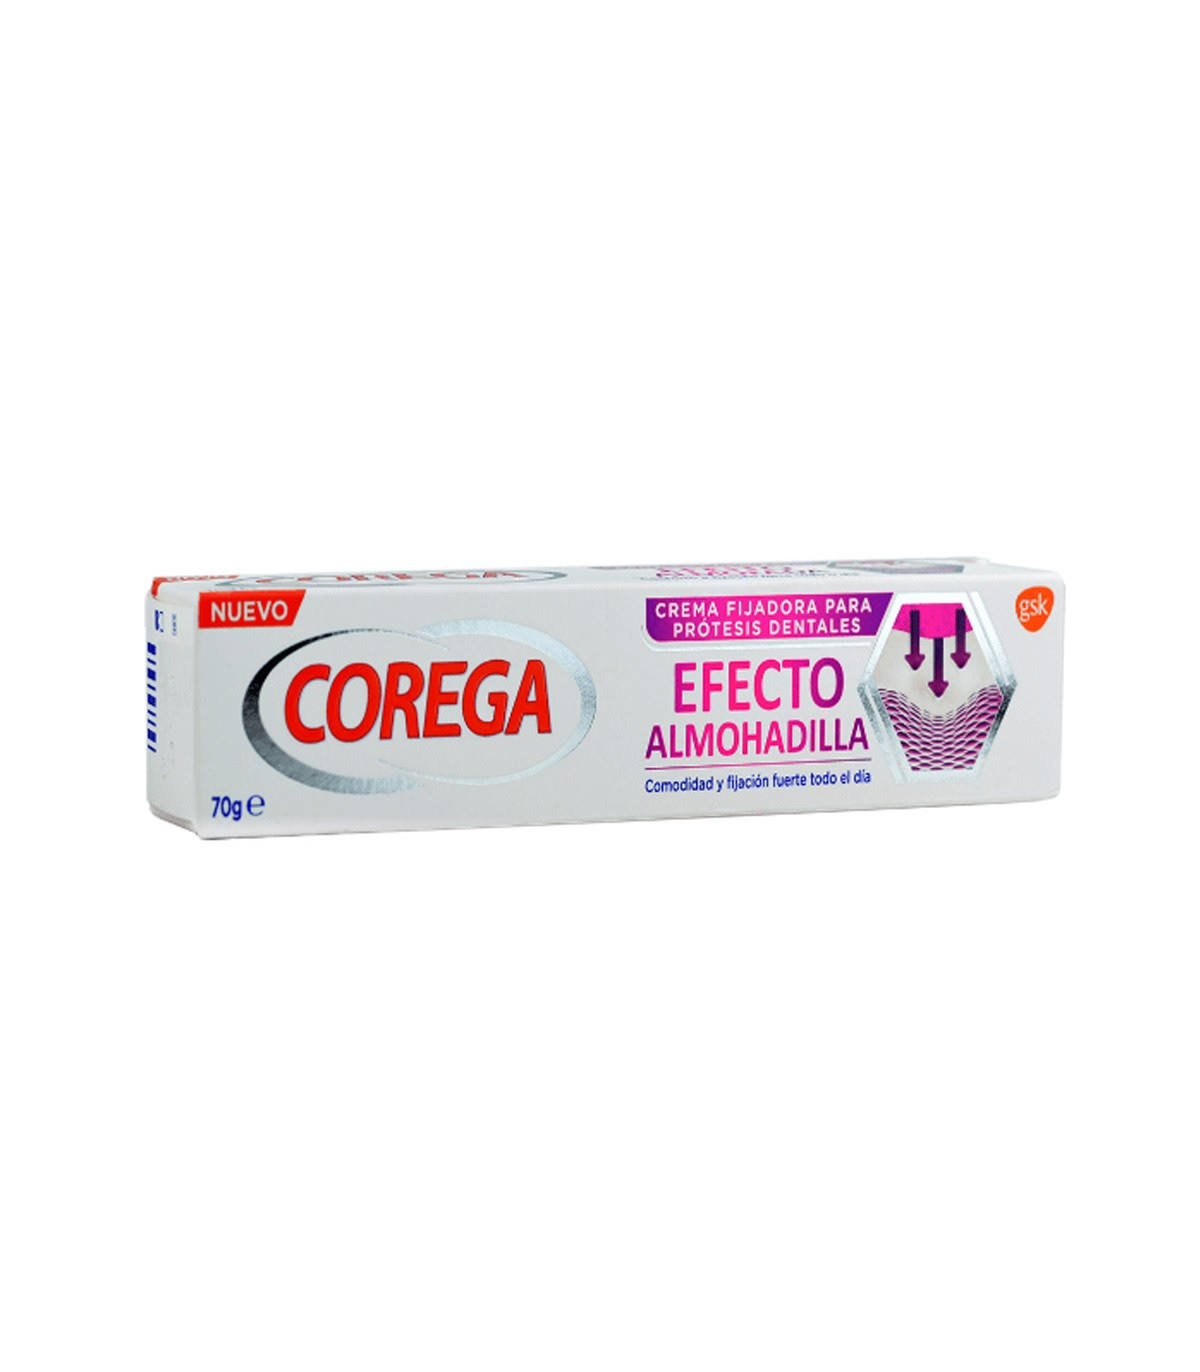 dubbellaag Susteen Direct Buy Corega Effect Adhesive Pad Protesis Dental 70 G Deals on Corega brand.  Buy Now!!